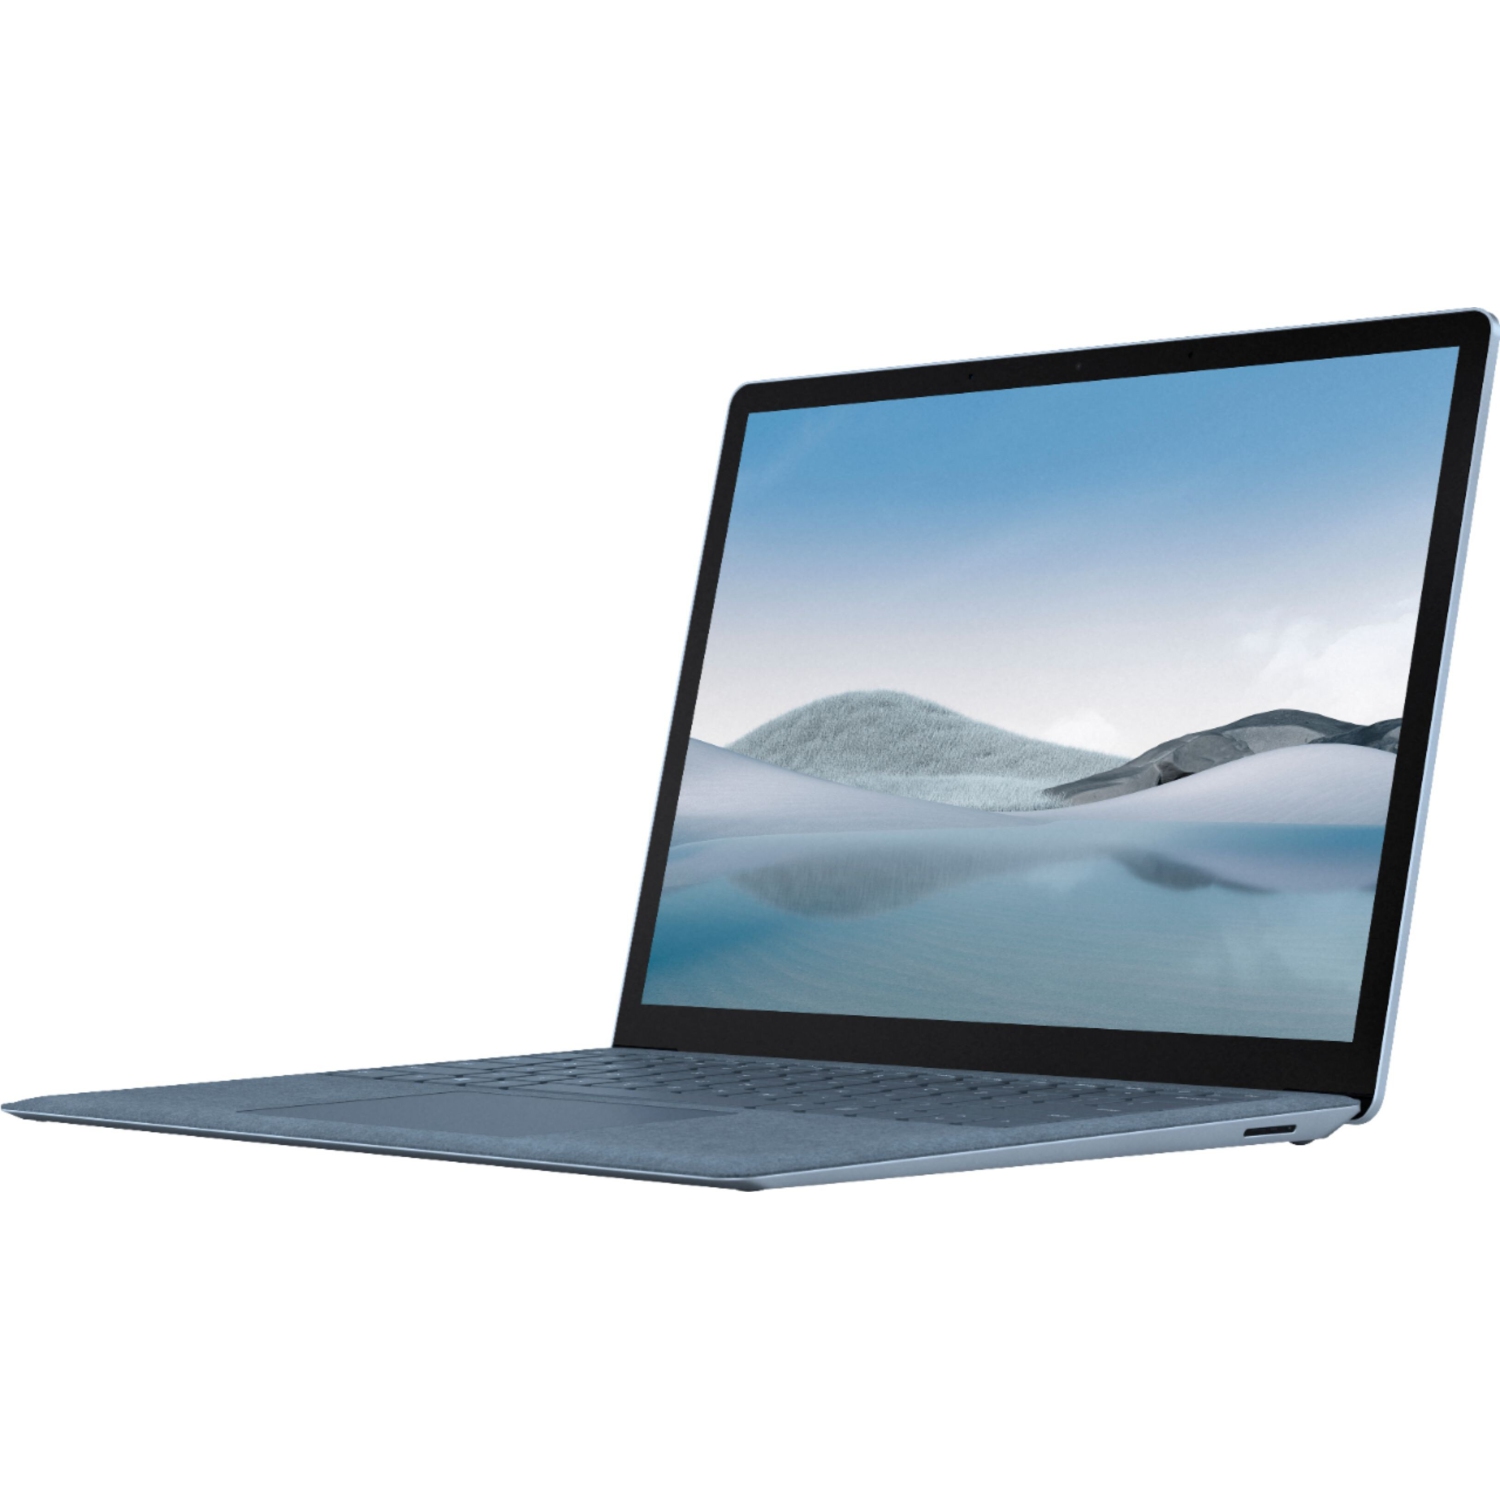 Refurbished (Good) - Microsoft Surface Laptop 4 13.5" - Matte Black (Intel Core i7-1185G7/256GB SSD/16GB RAM) -Windows 10 pro